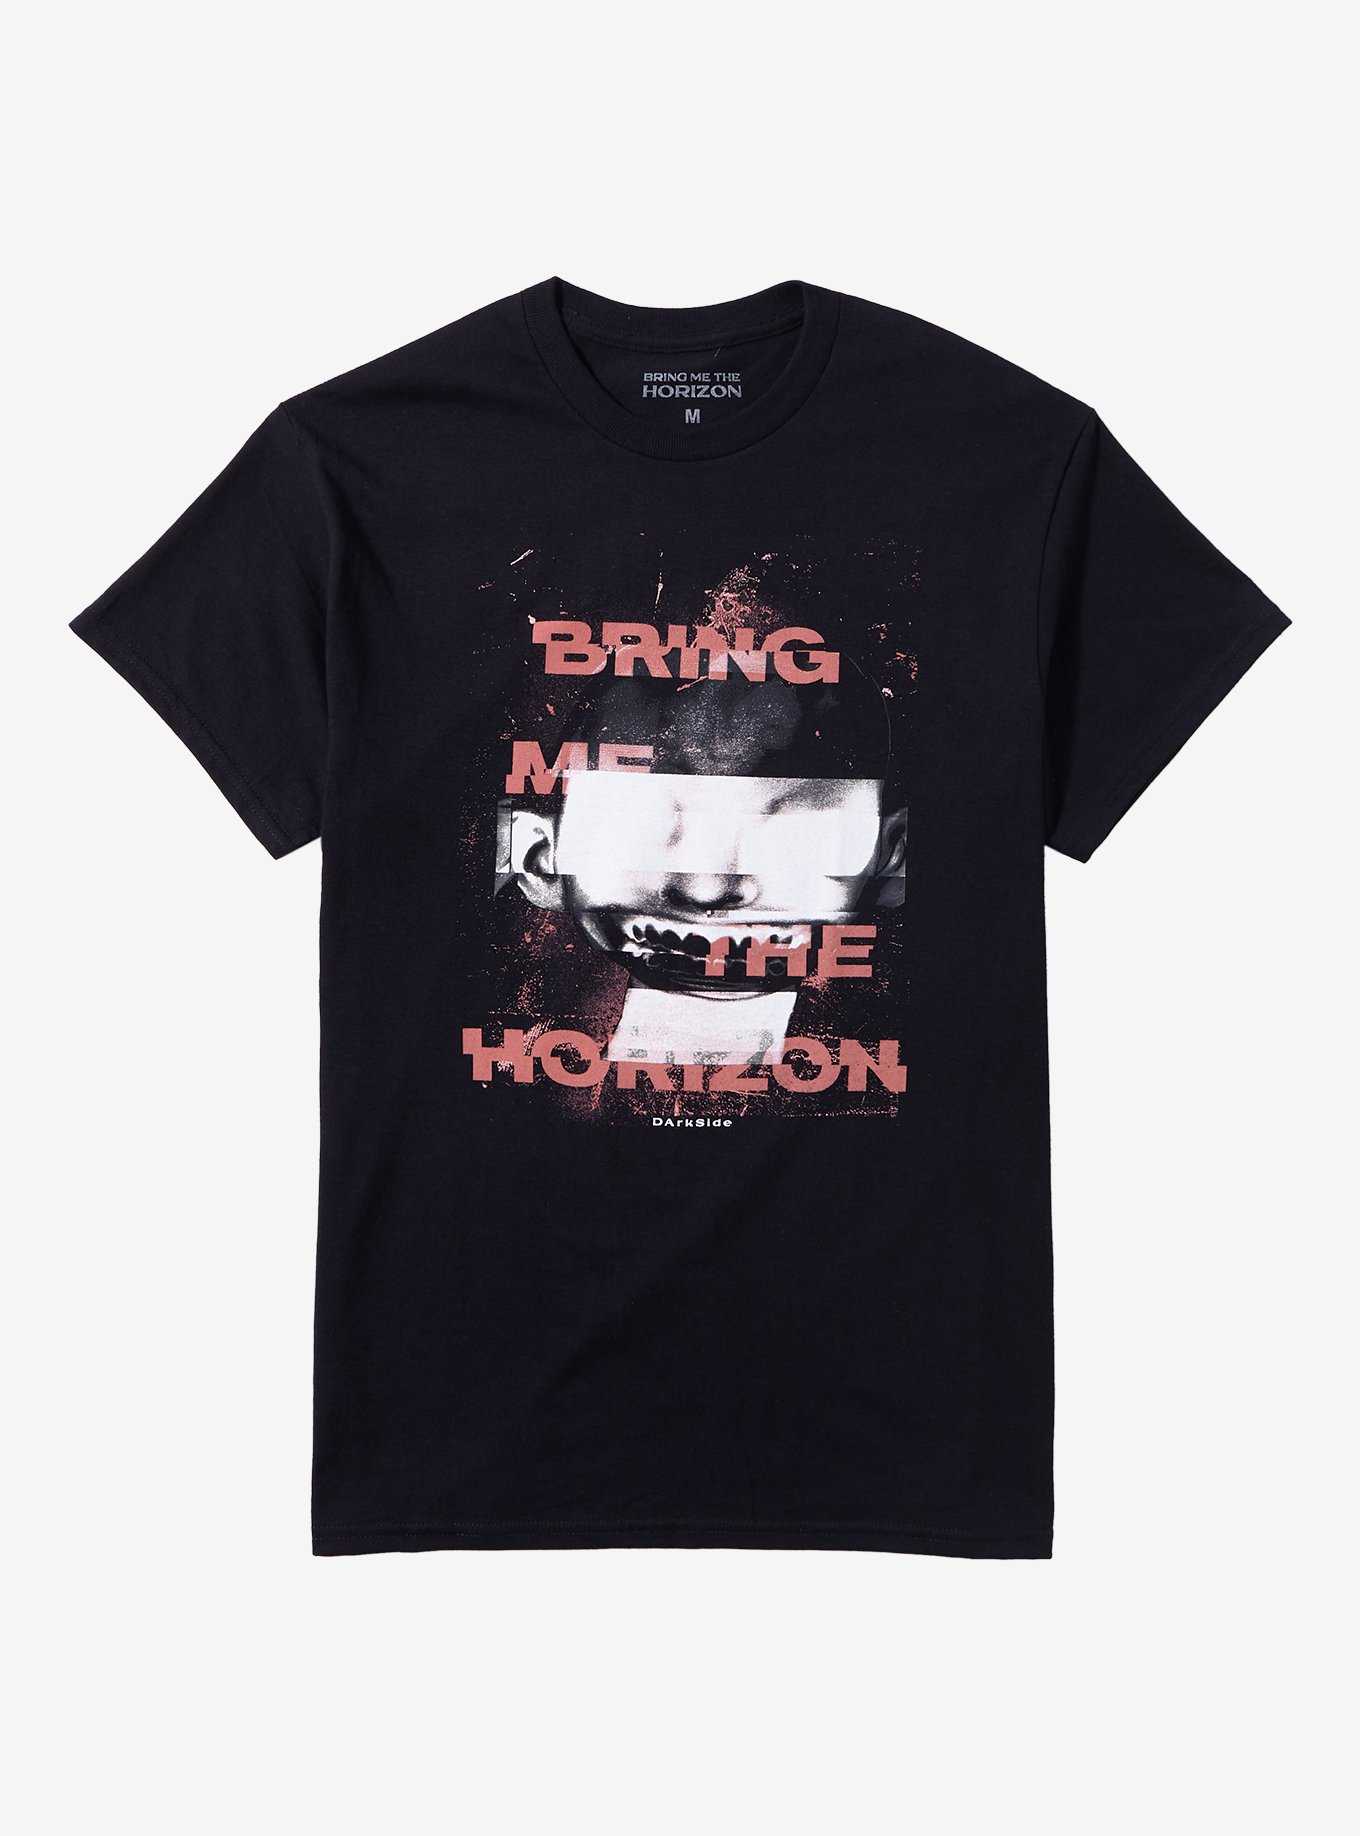 Bring Me The Horizon DArkSide T-Shirt, , hi-res